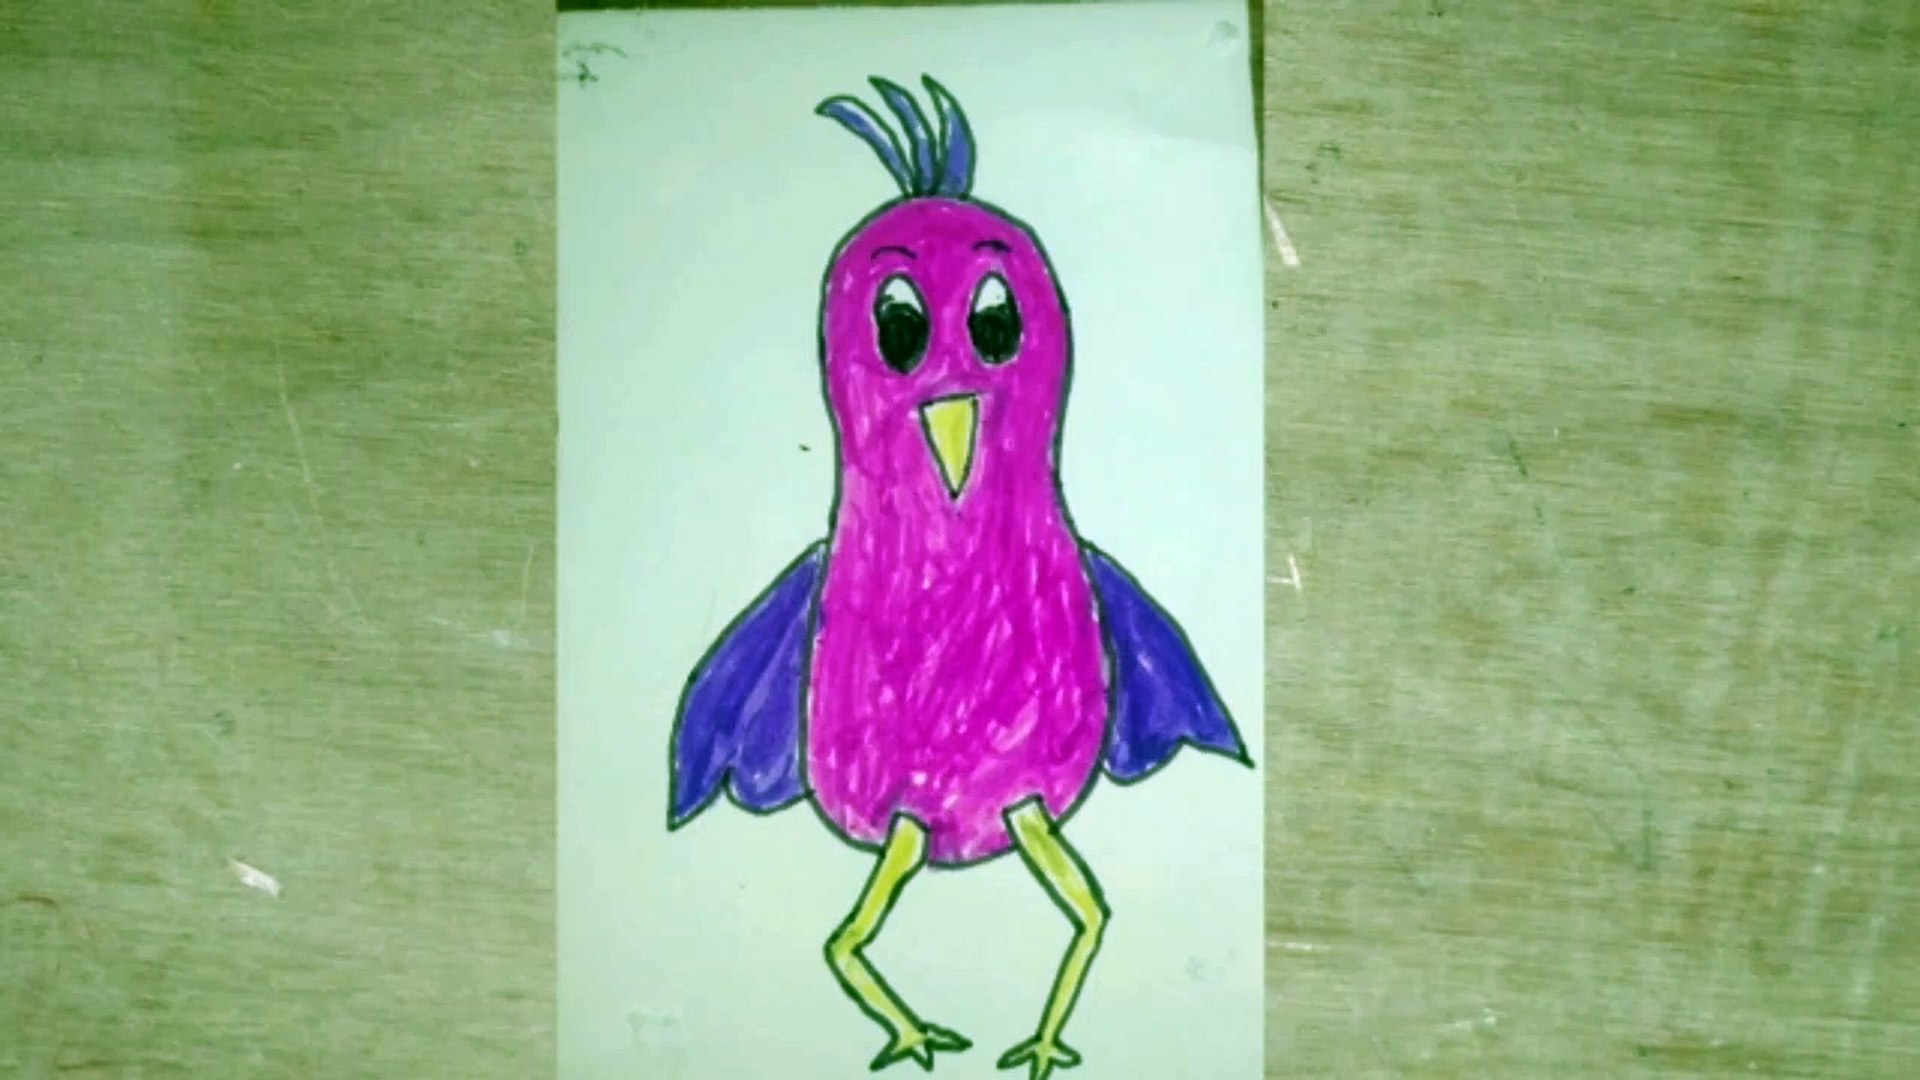 How to draw Opila (Bird Garten of Banban) 